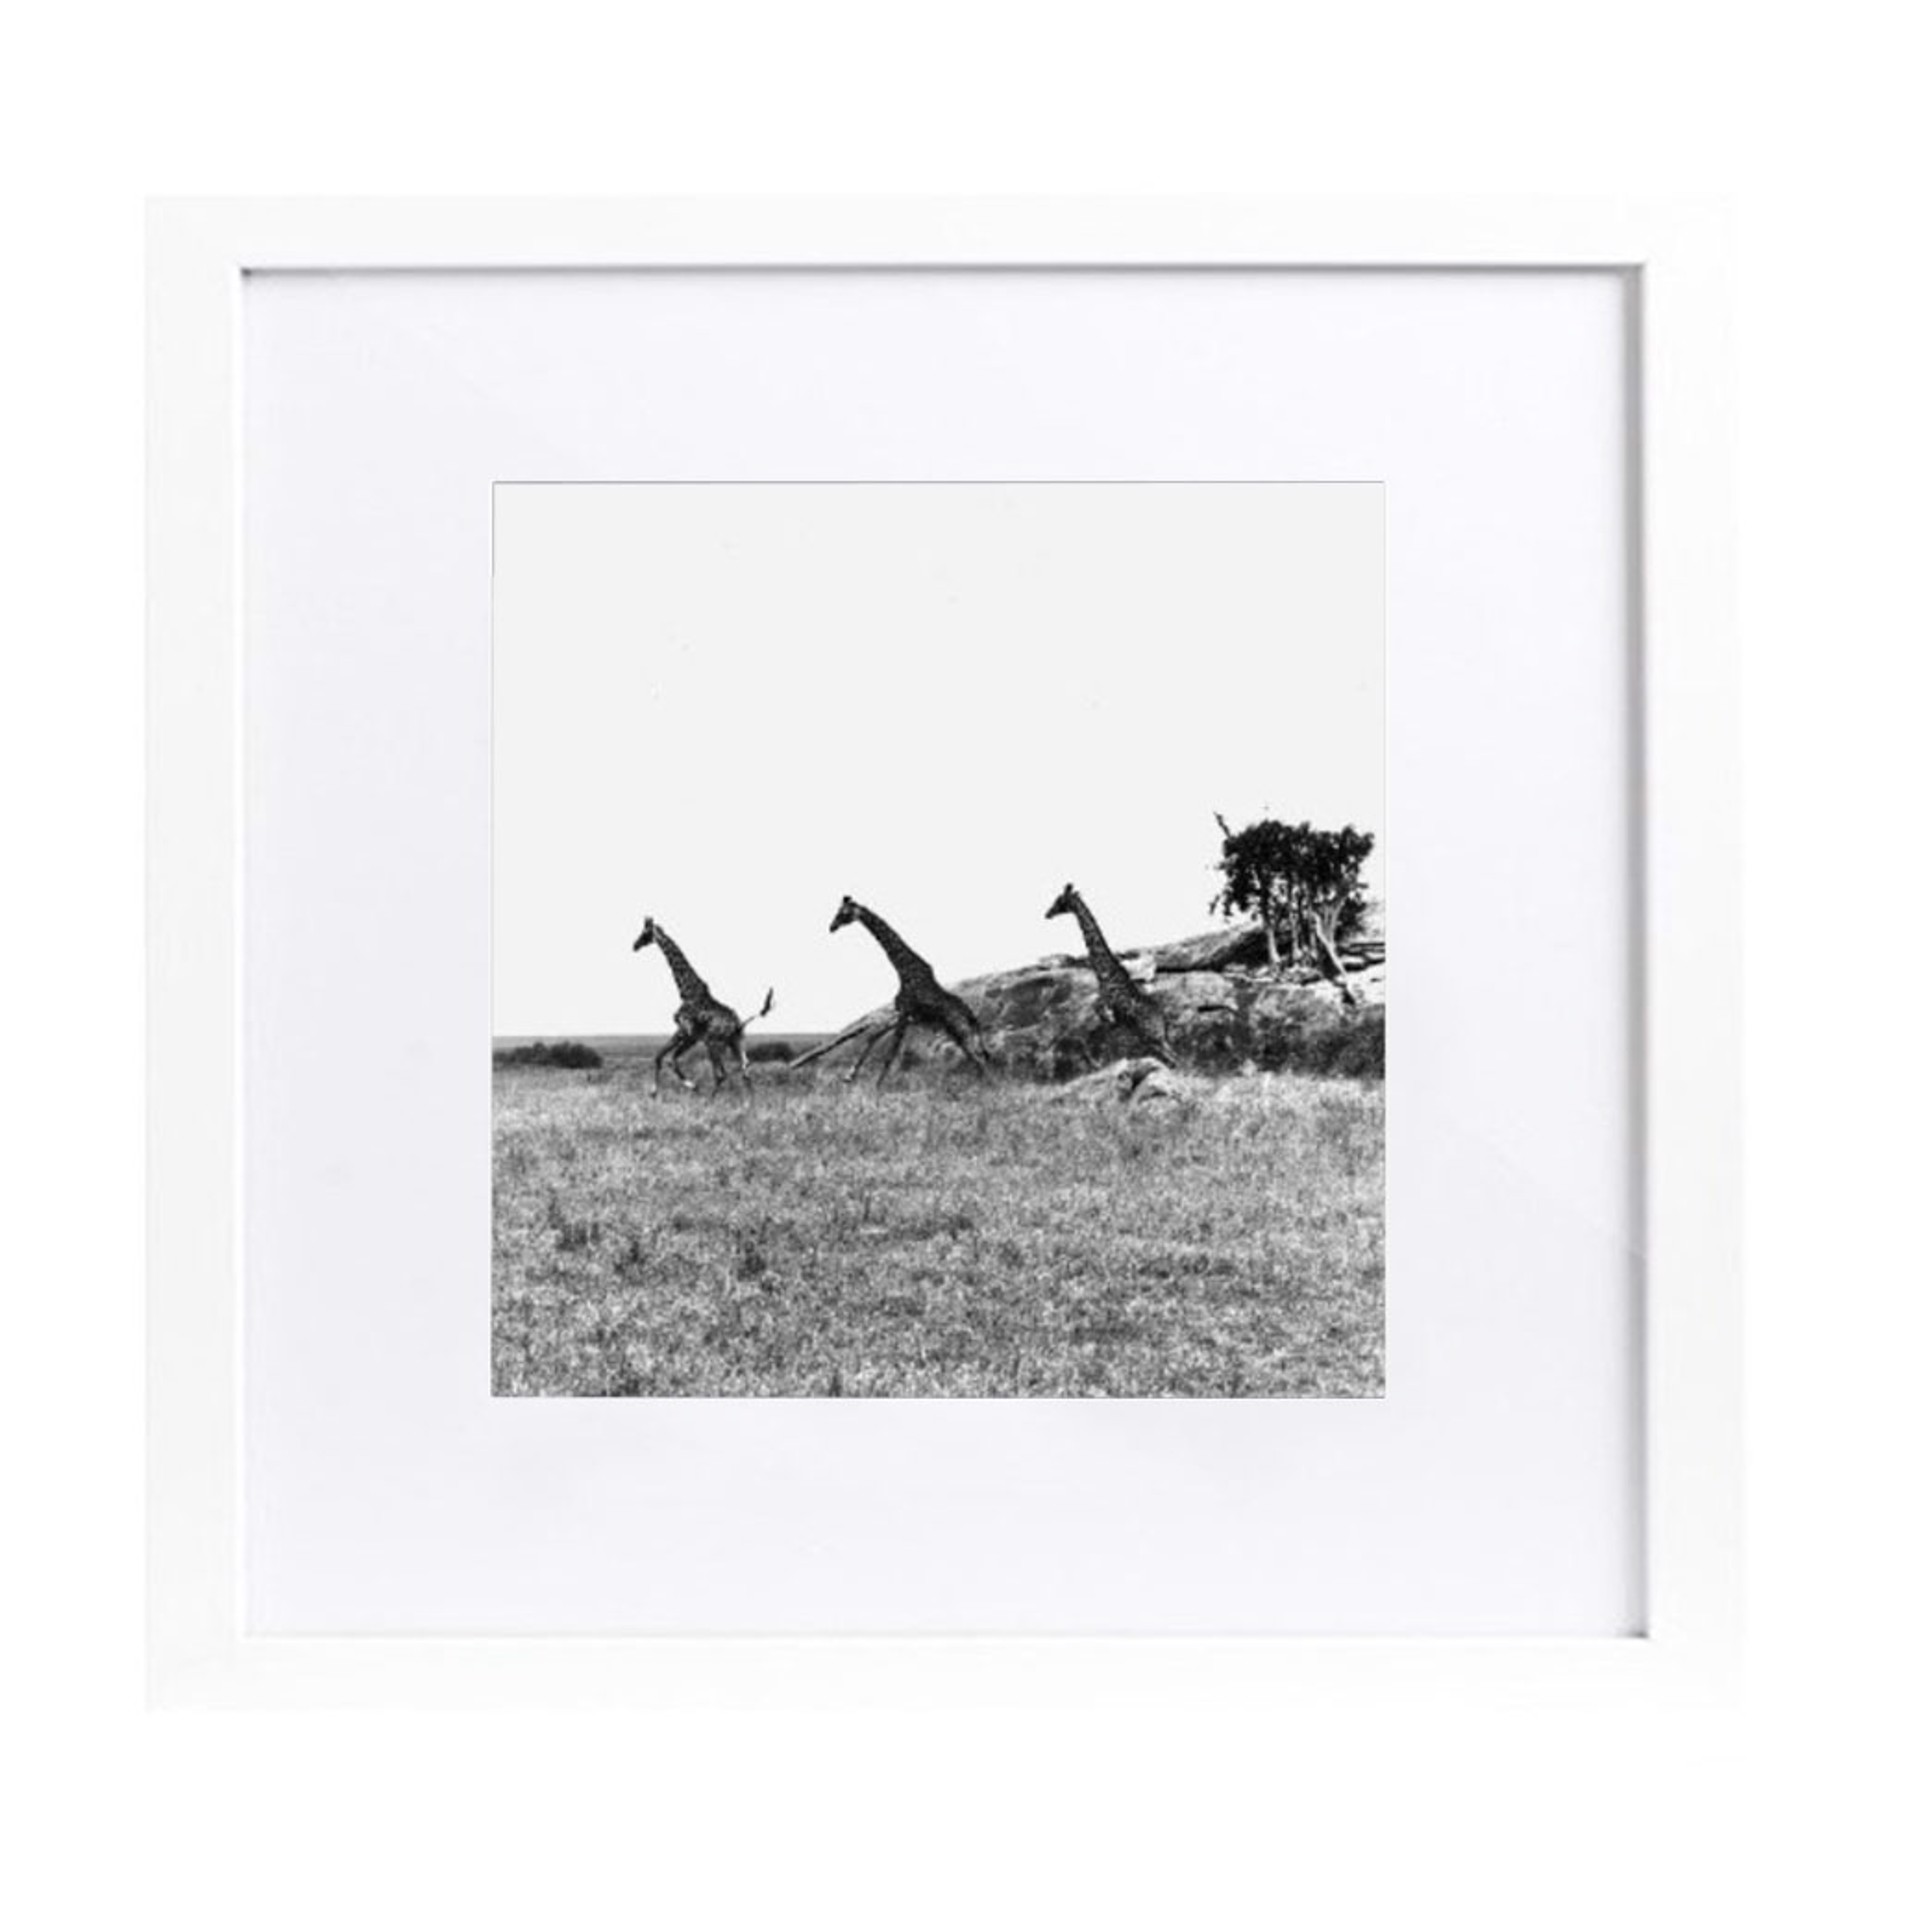 Giraffes (Tanzania) by Patrick Demarchelier